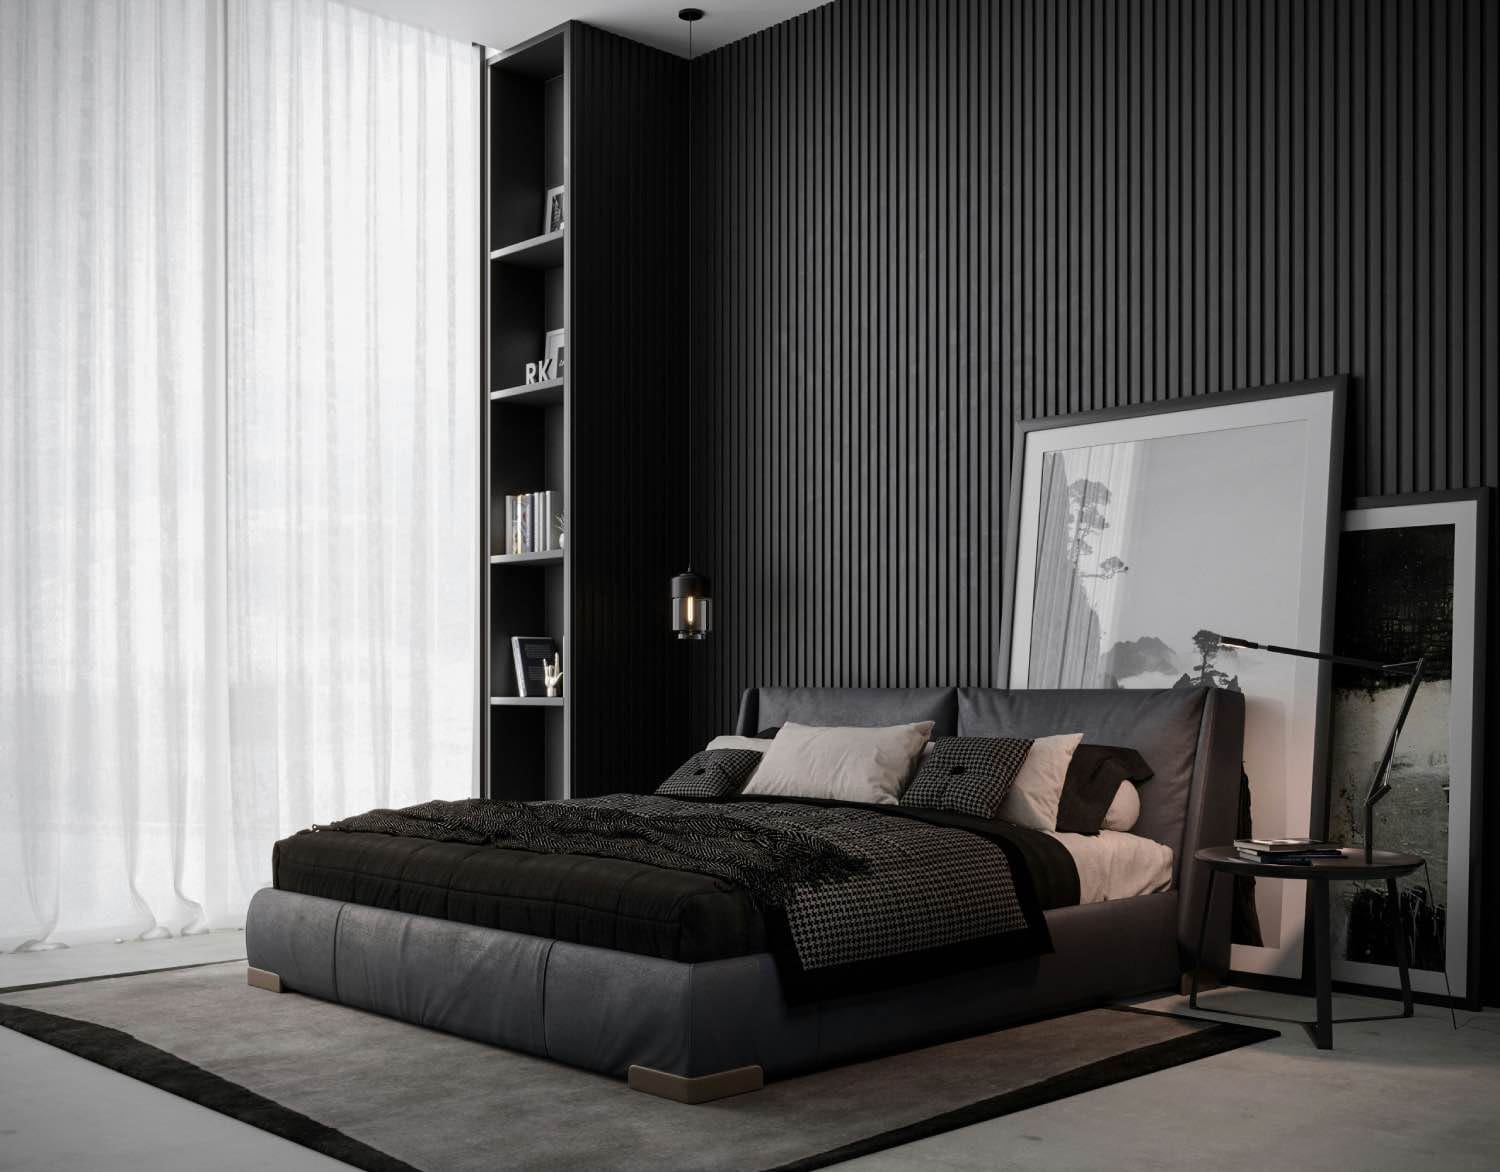 decoración de dormitorio moderno negro con cortinas blancas